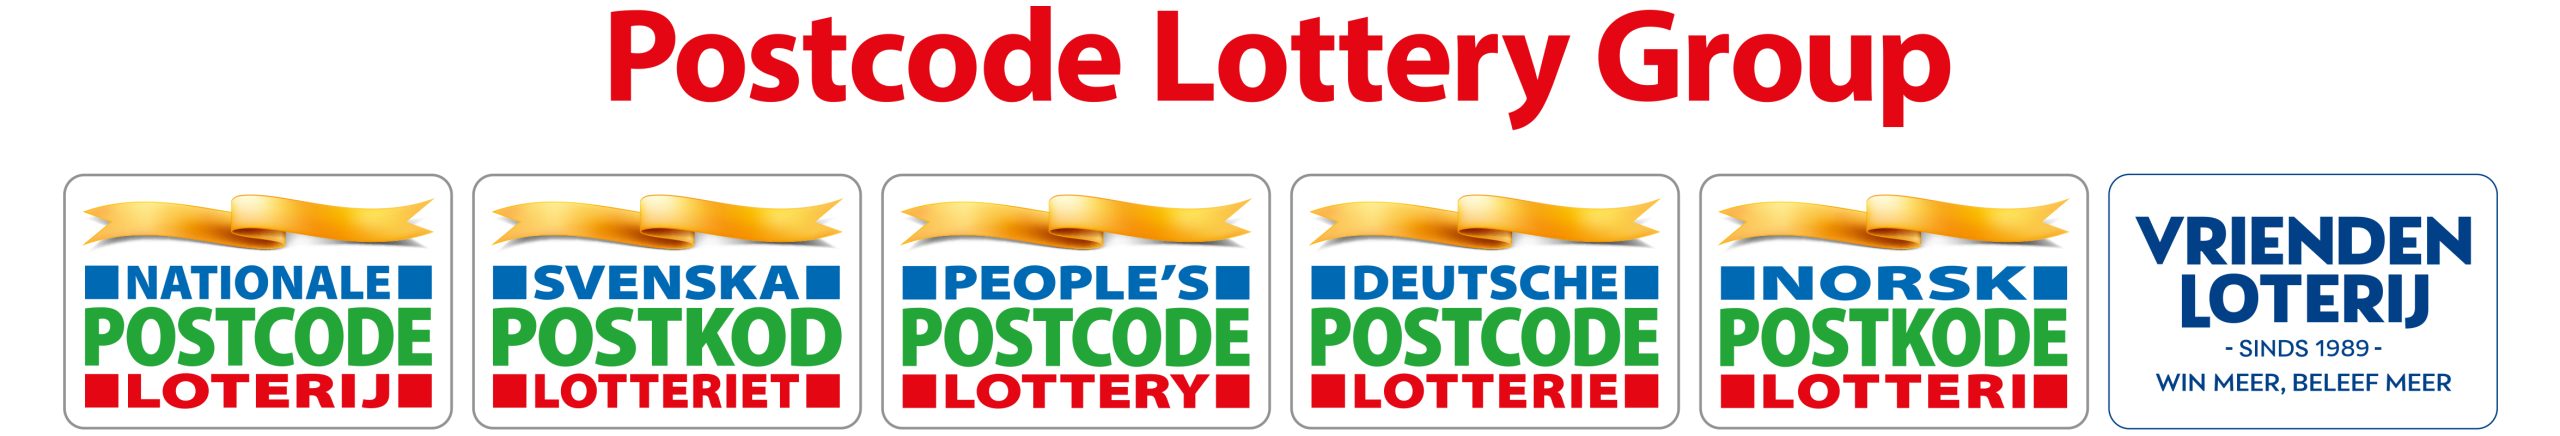 Postcode Lottery Group